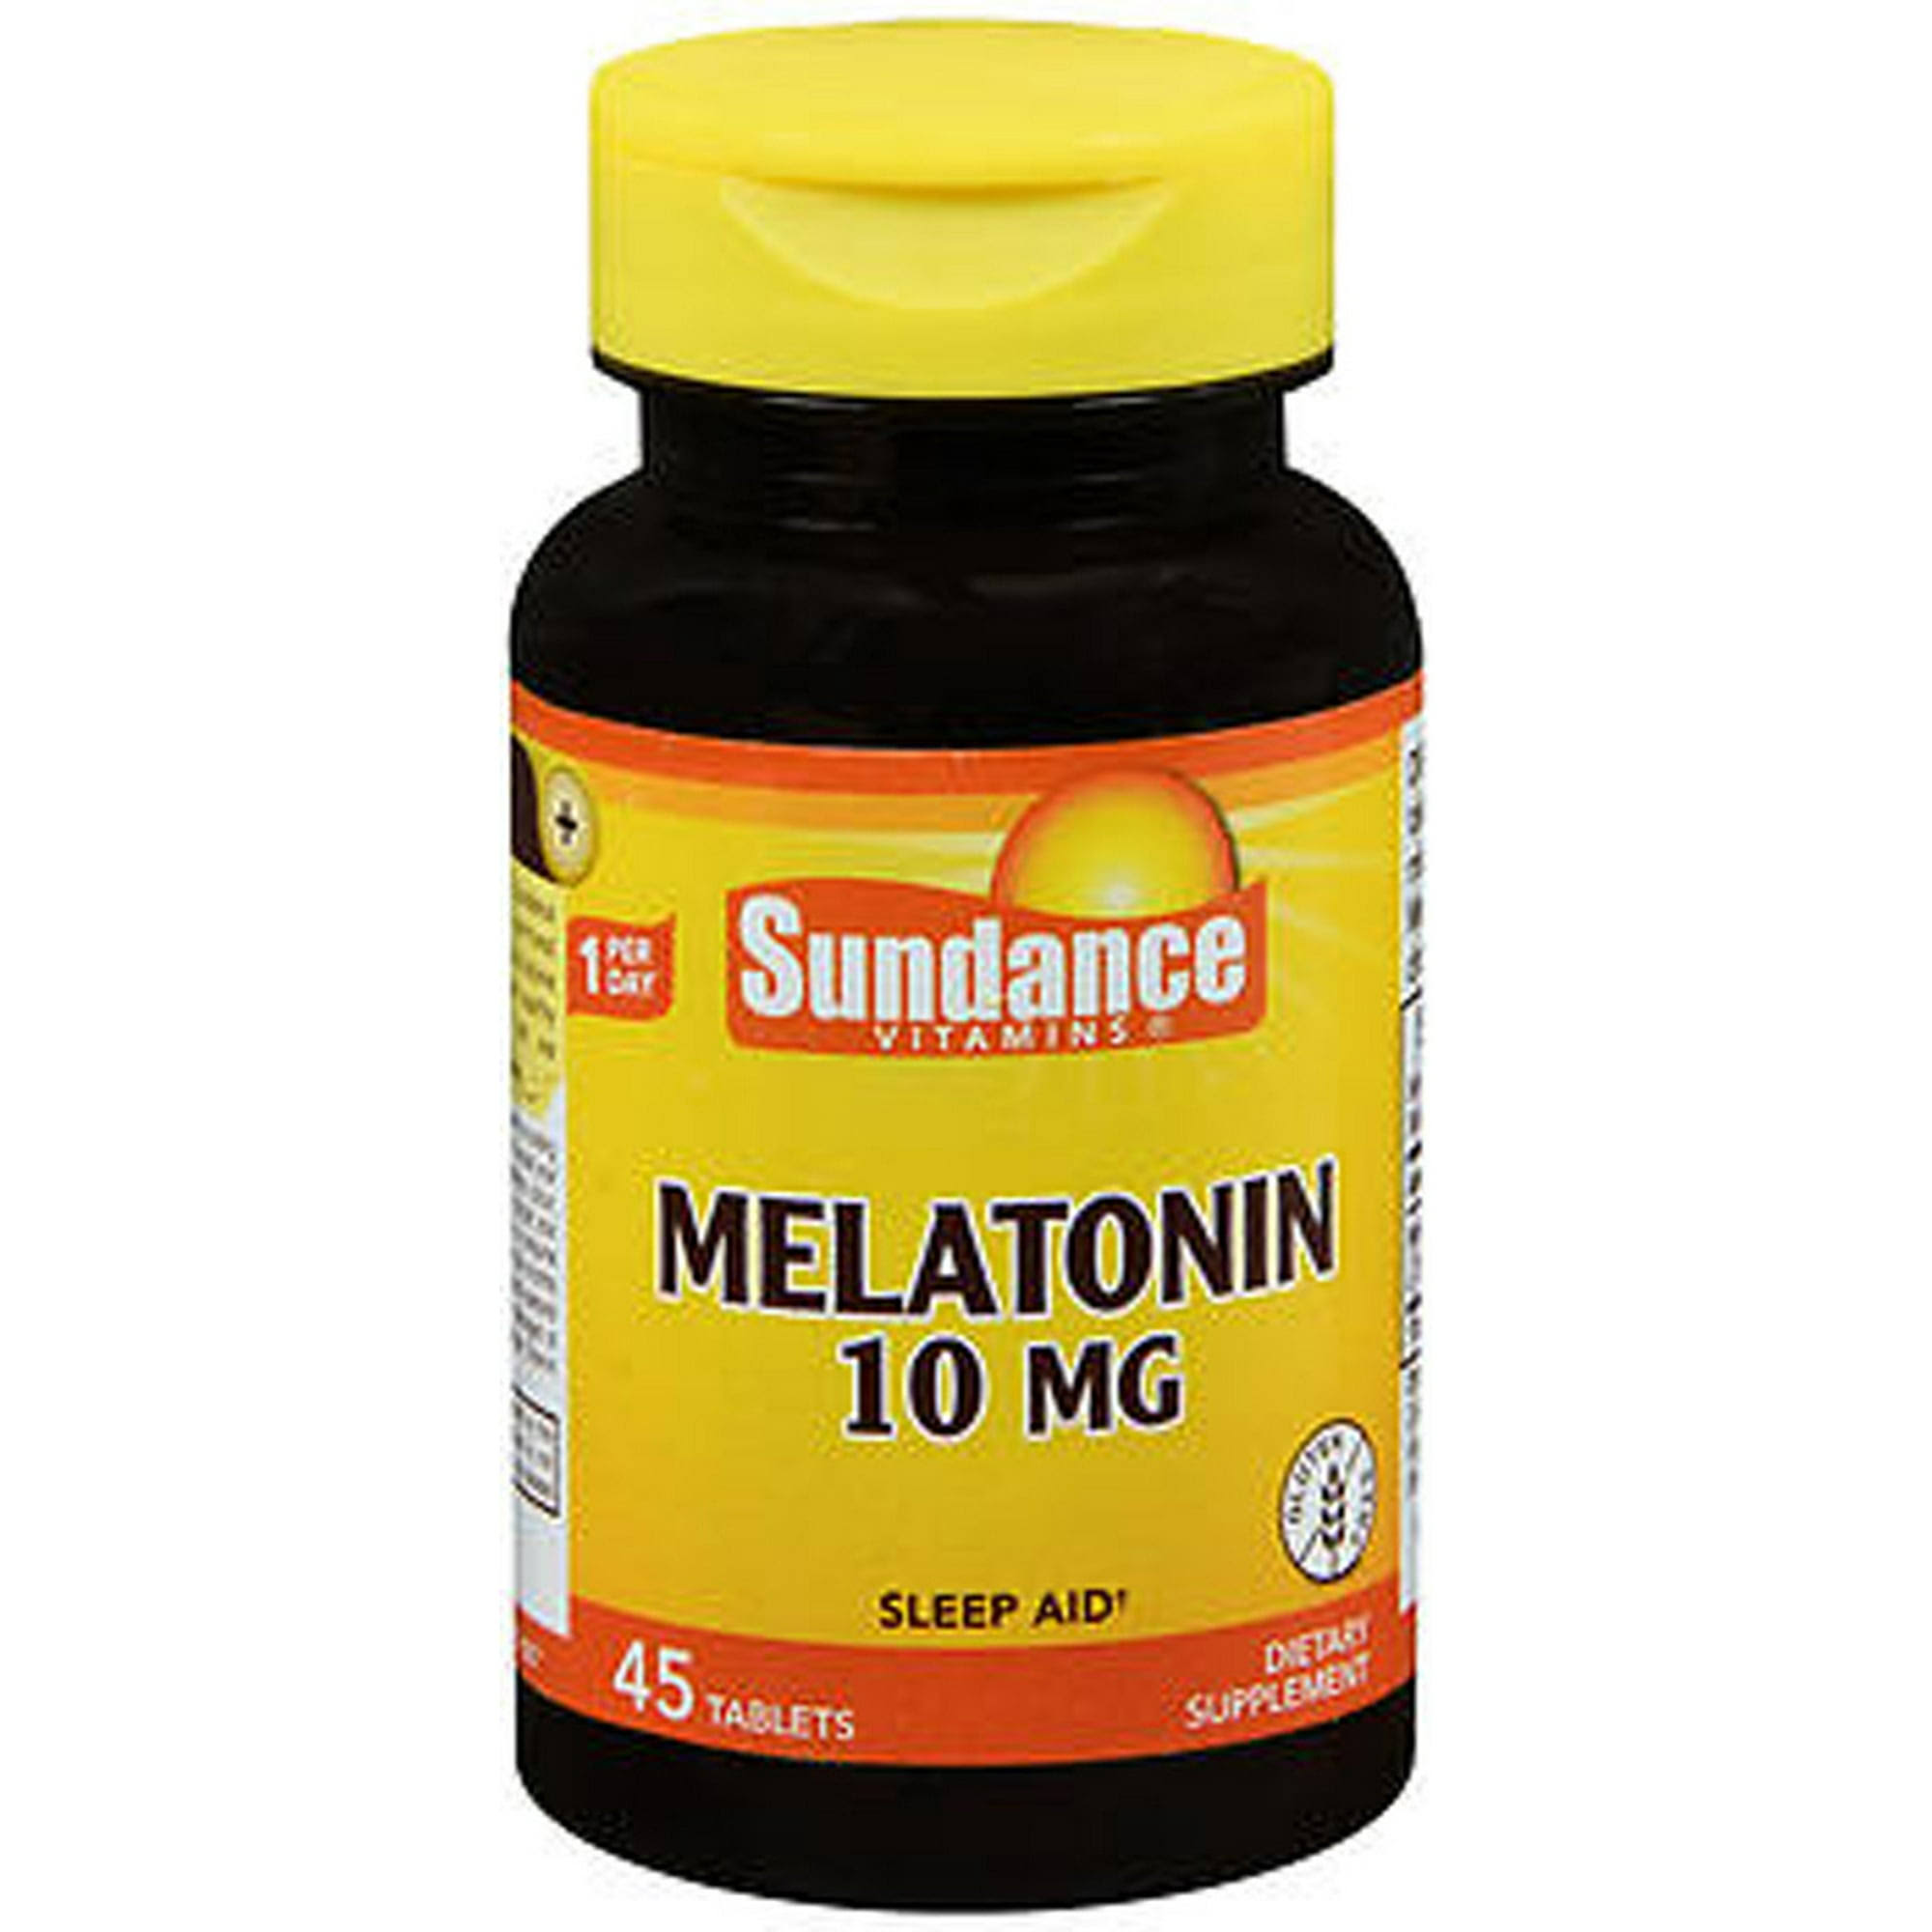 Sundance Vitamins Melatonin Sleep Aid Supplement - 10mg, 45ct